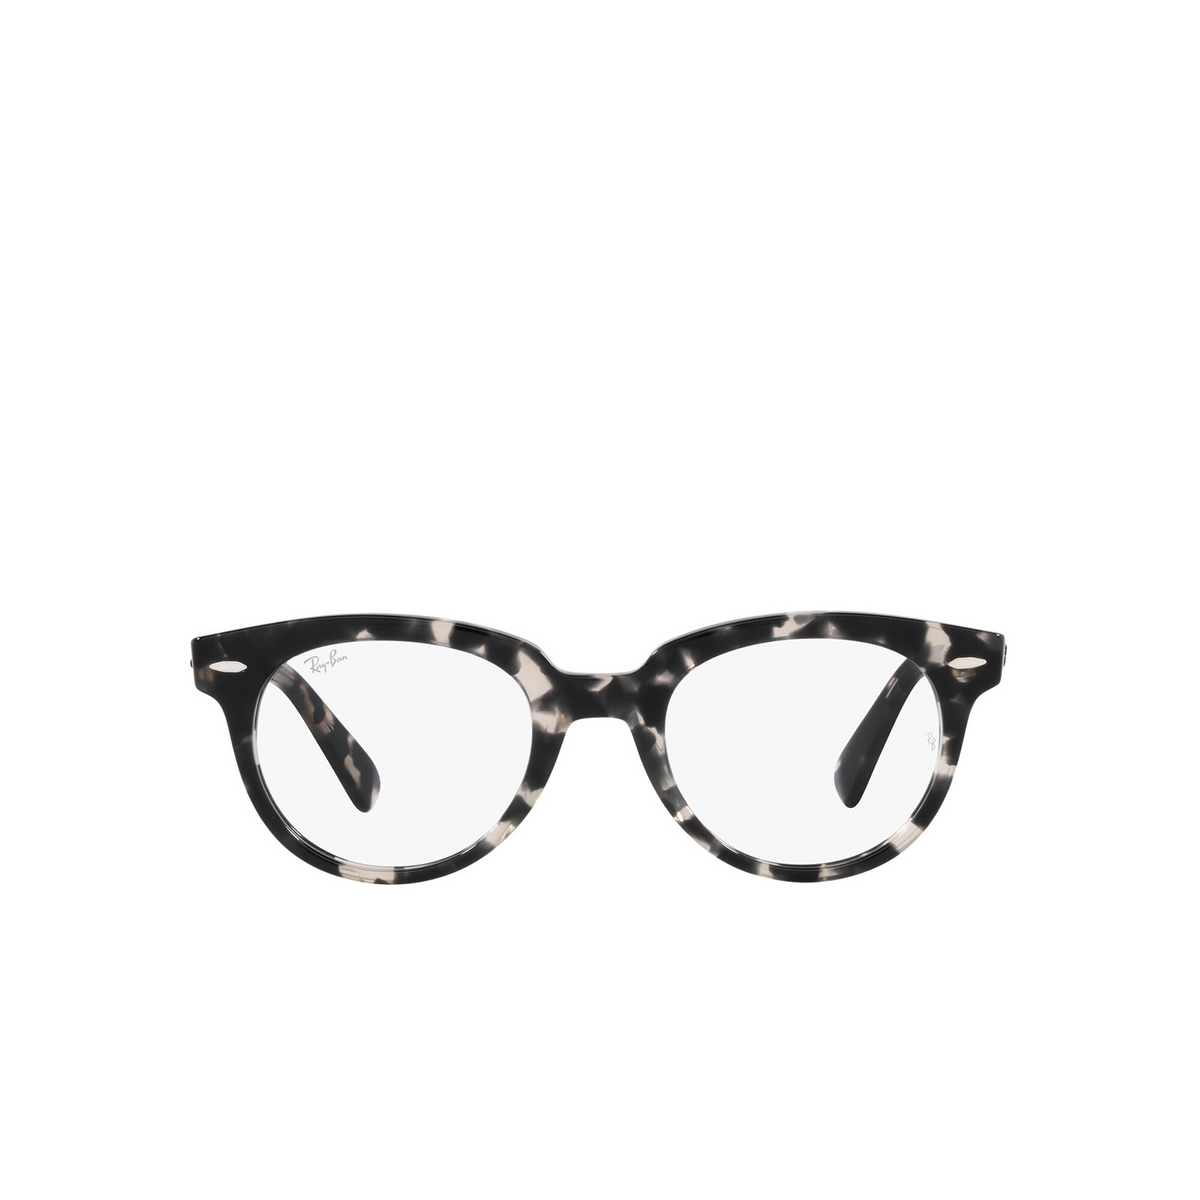 Ray-Ban® Round Eyeglasses: RX2199V color Grey Havana 8117 - front view.